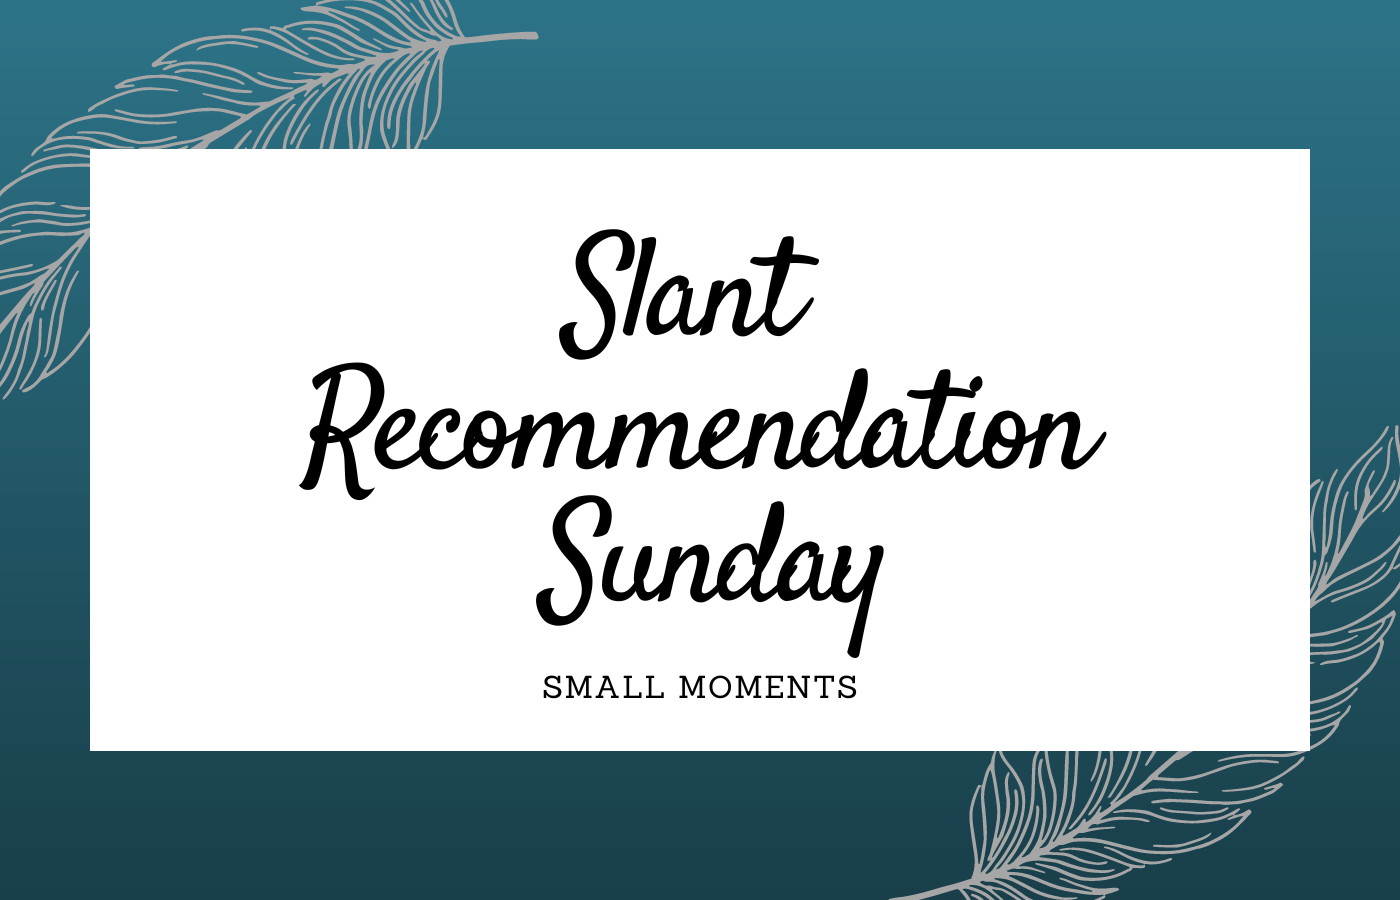 Sunday Slant Recommendation: Small Moments